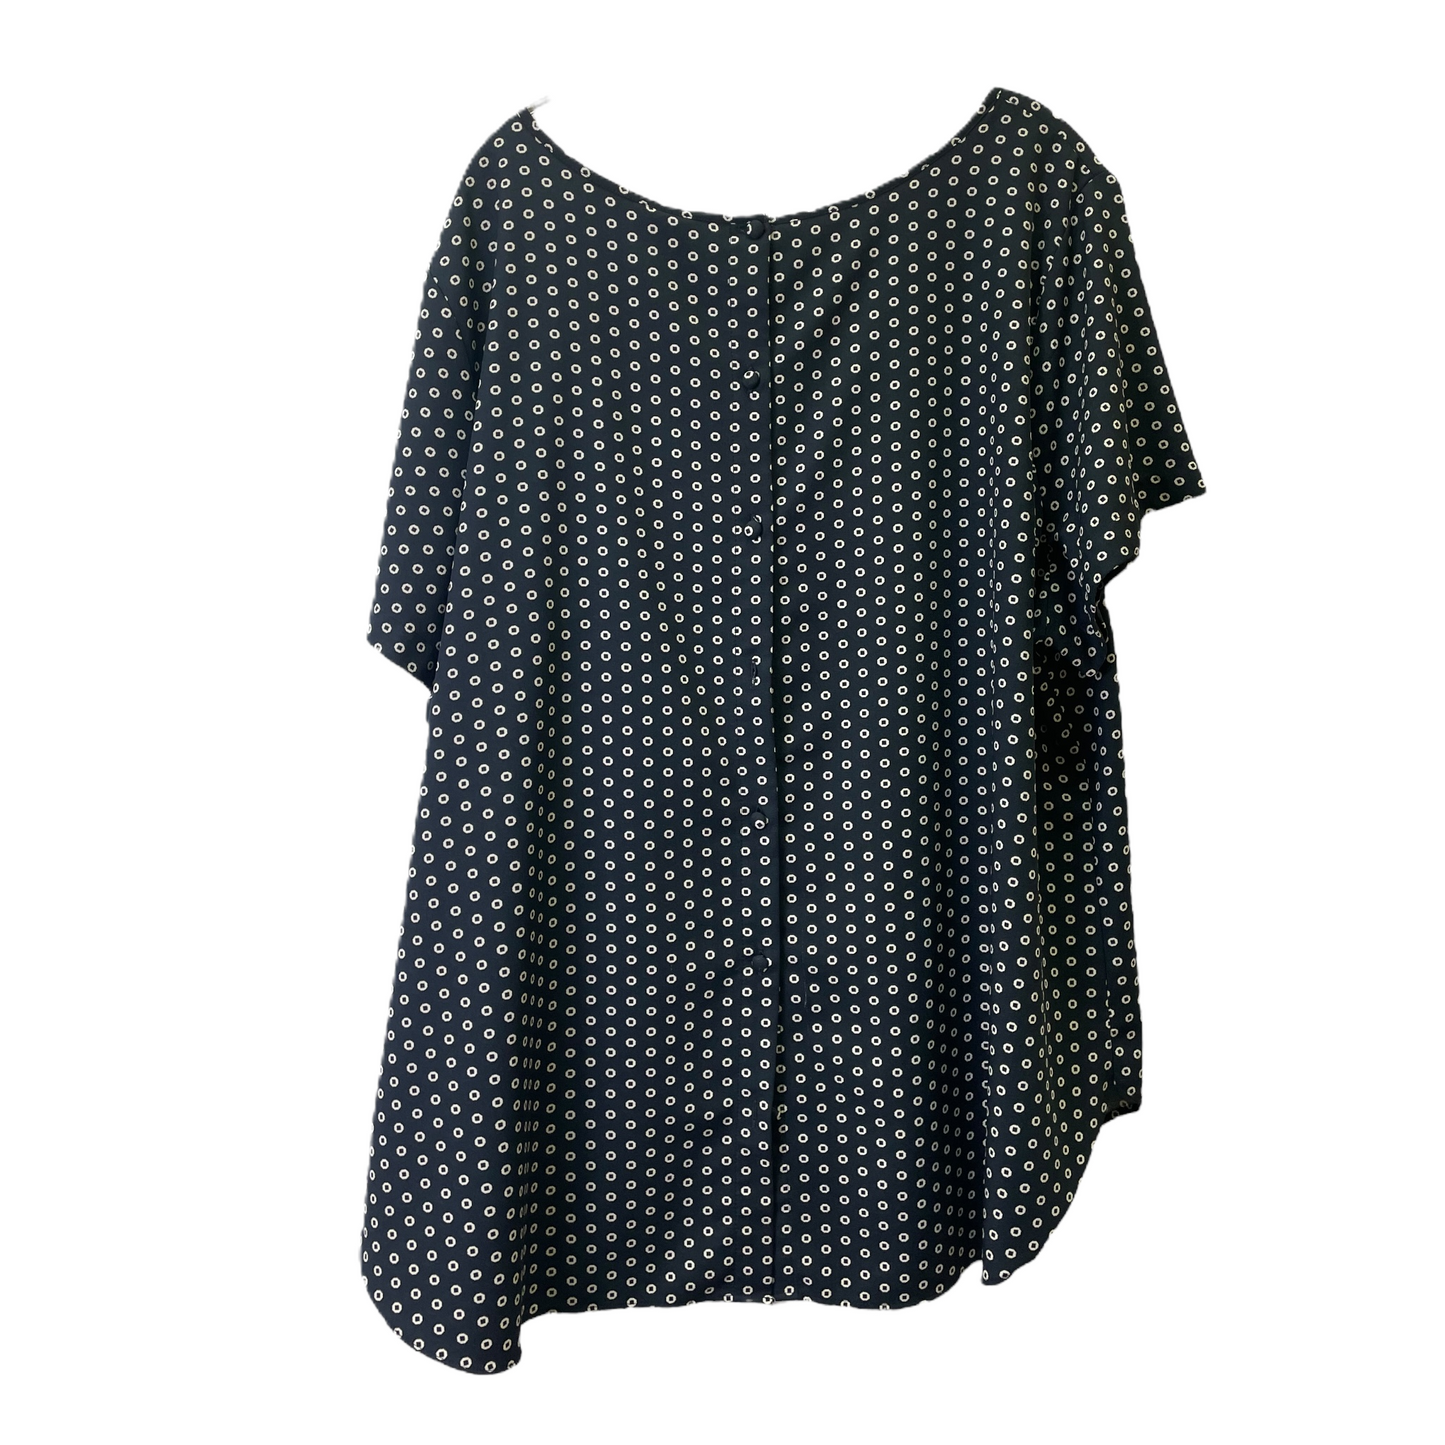 Black Top Short Sleeve Basic By Ava & Viv, Size: 3x